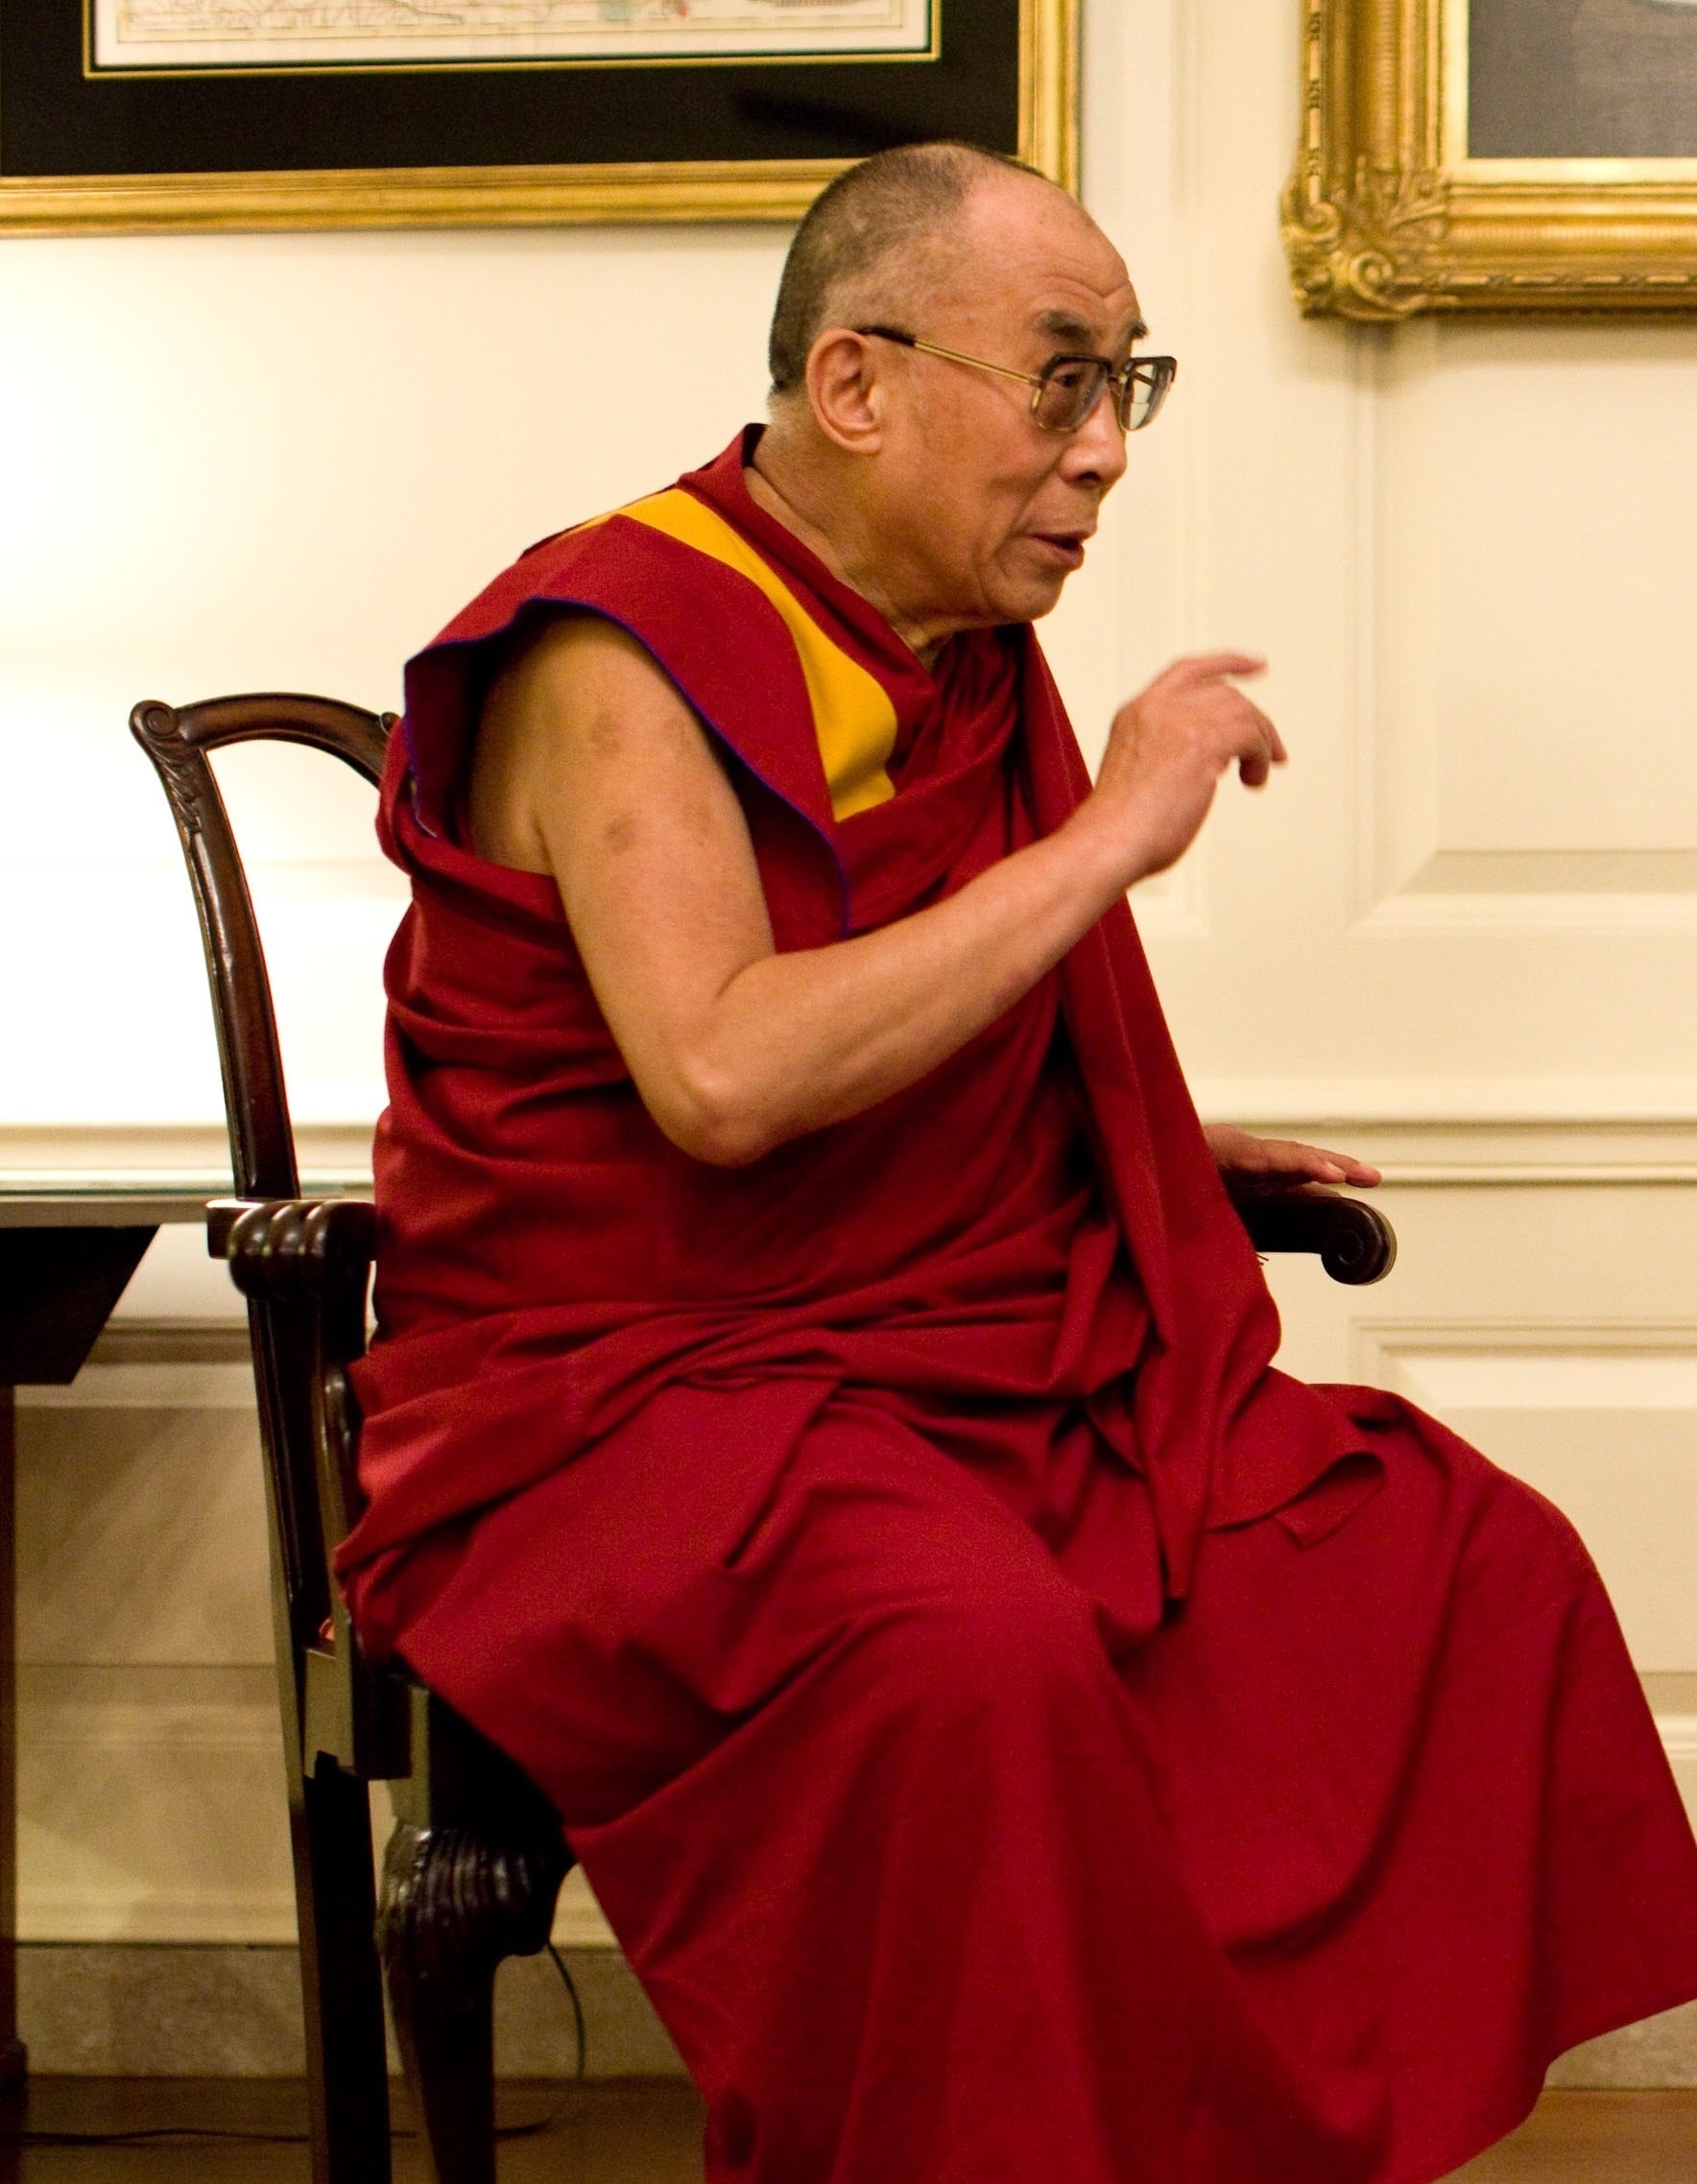 Dalai Lama, Portrait, Discussion, Smile, one man only, mature adult